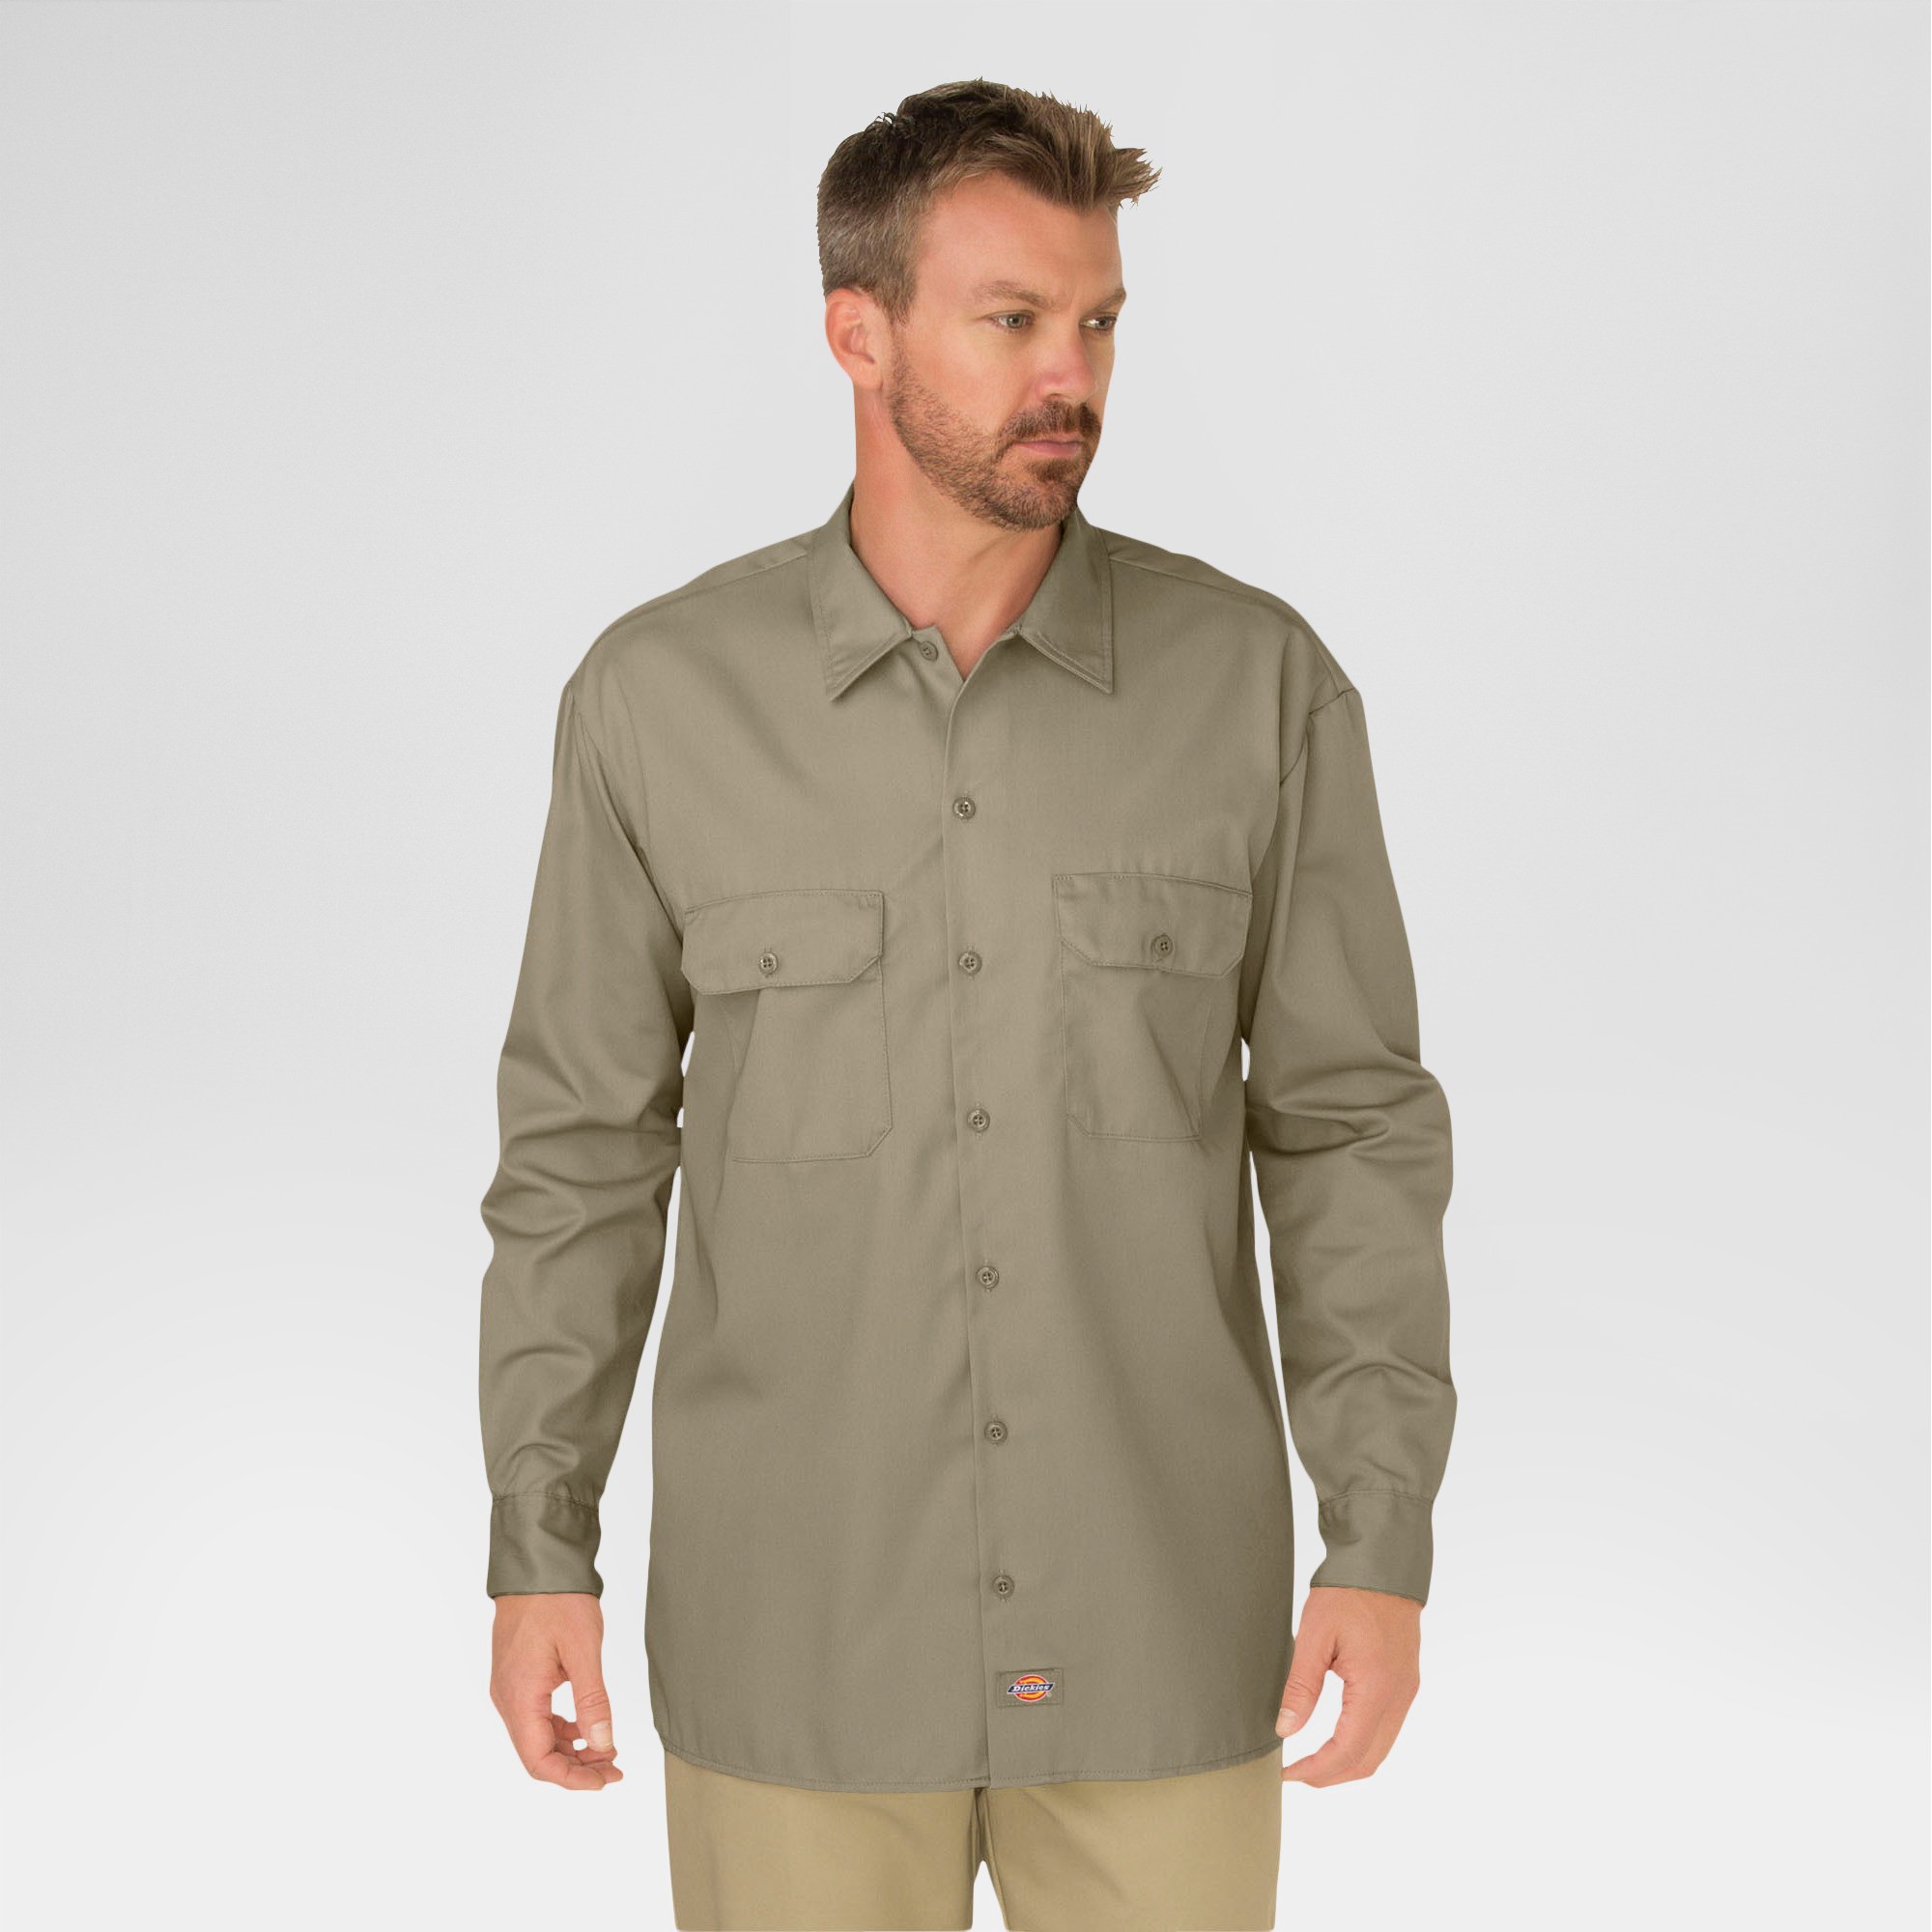 Dickies Men's Original Fit Twill Long Sleeve Shirt-Khaki S, Size: Small, Green